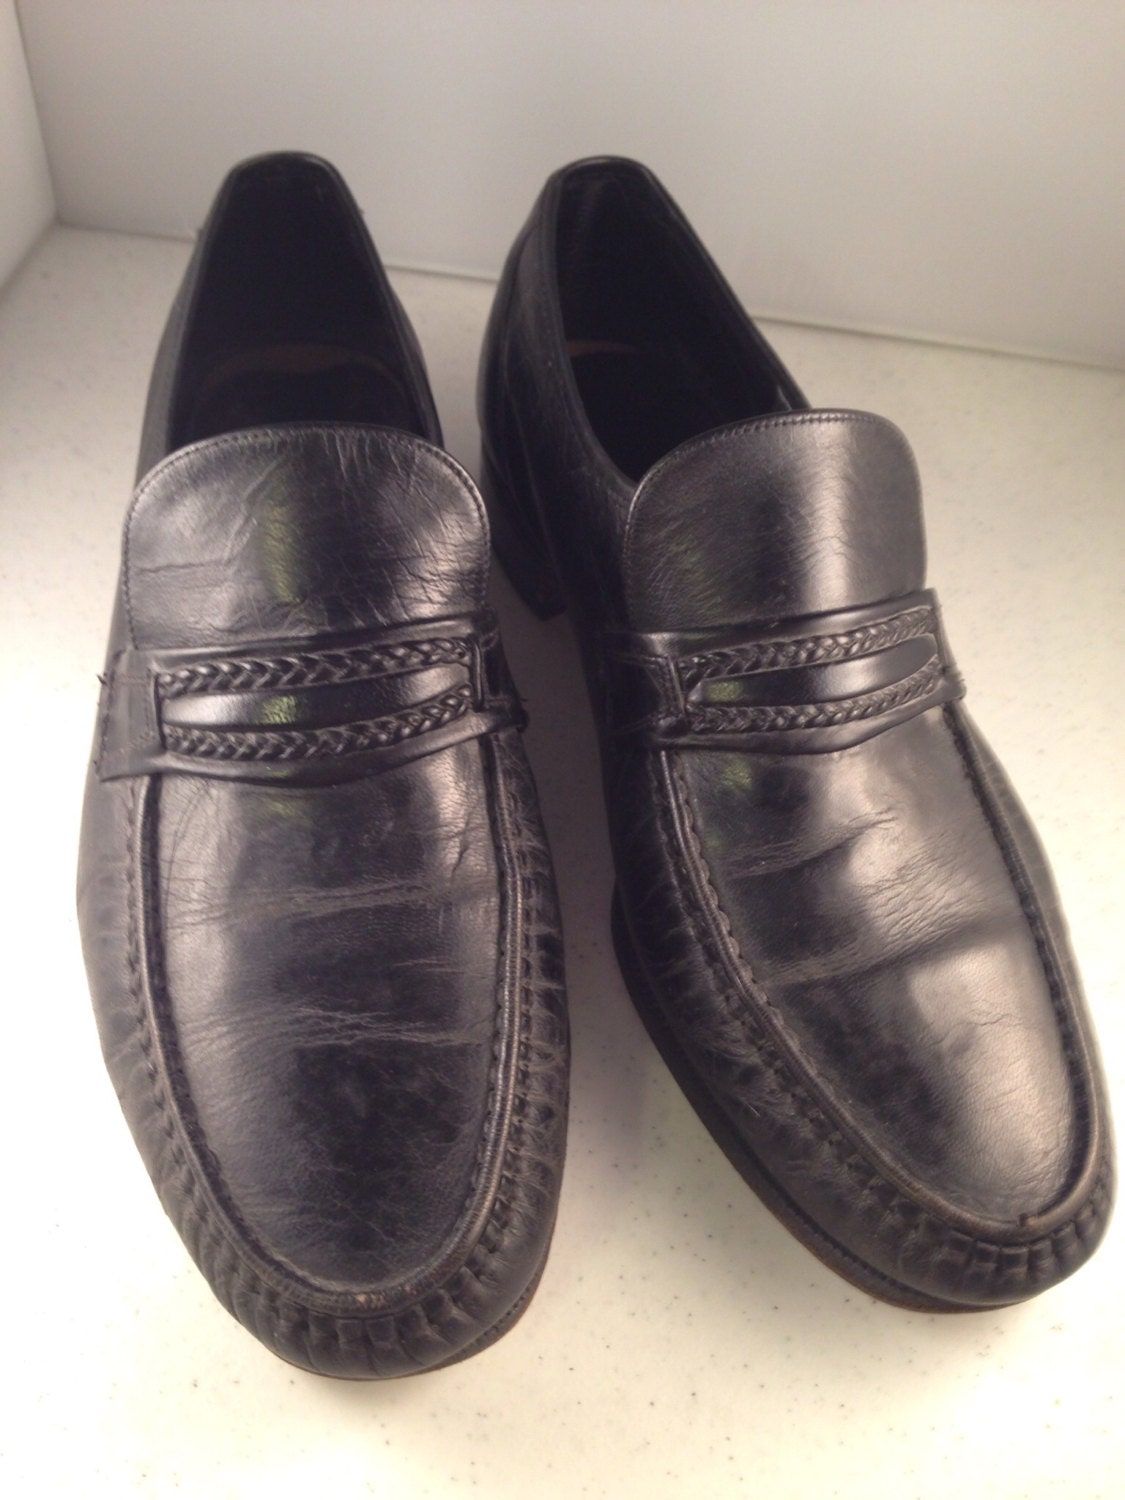 Men’s Black Florsheim Leather Loafers Size 10.5 D on SALE